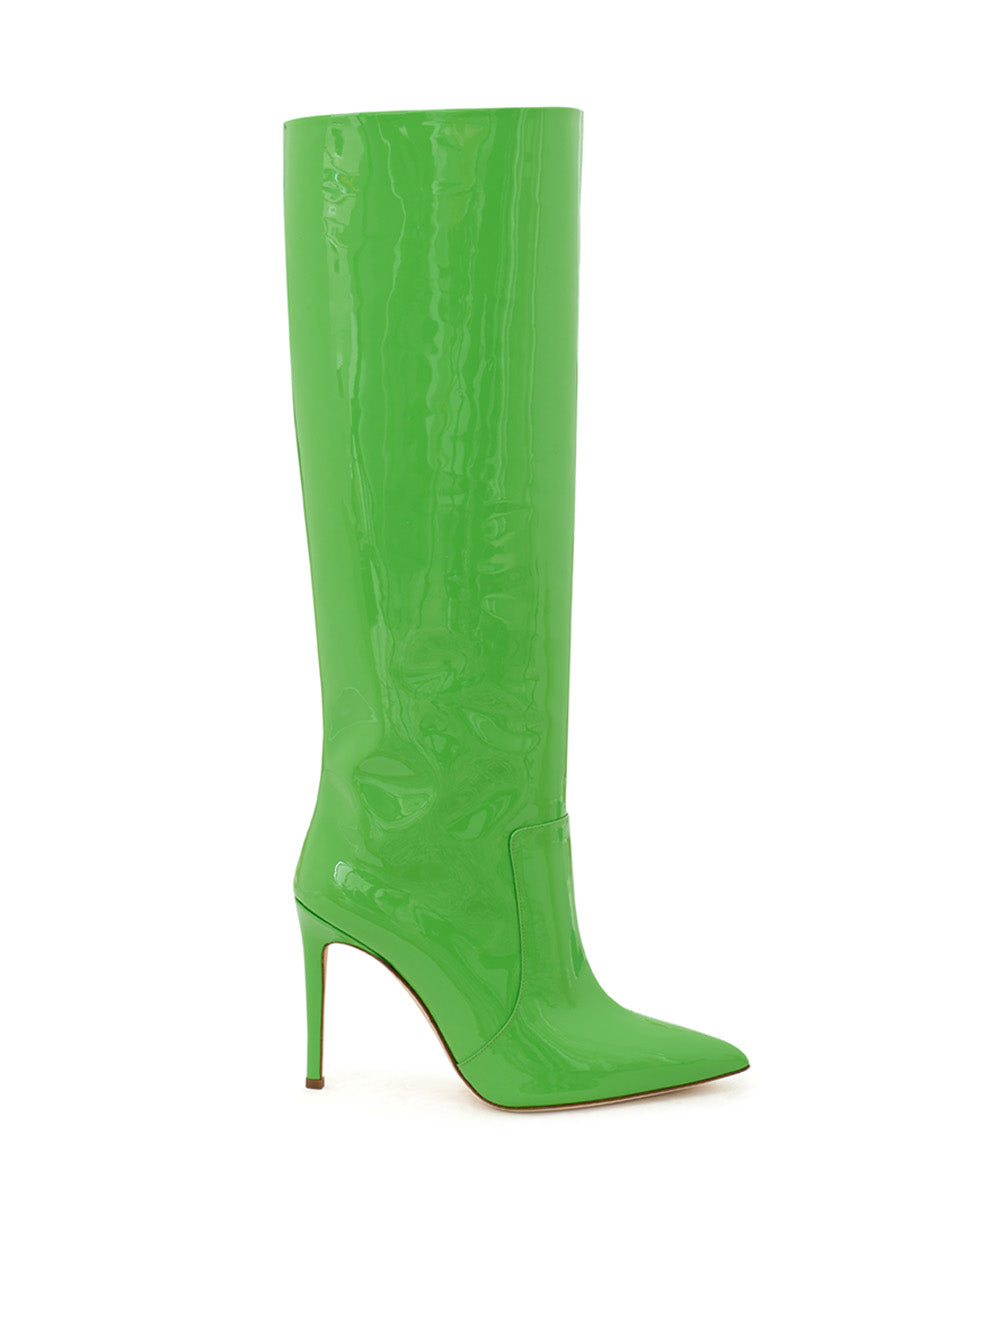 Paris Texas Green Patent Leather Boot, Nahim - Luxury Wardrobe